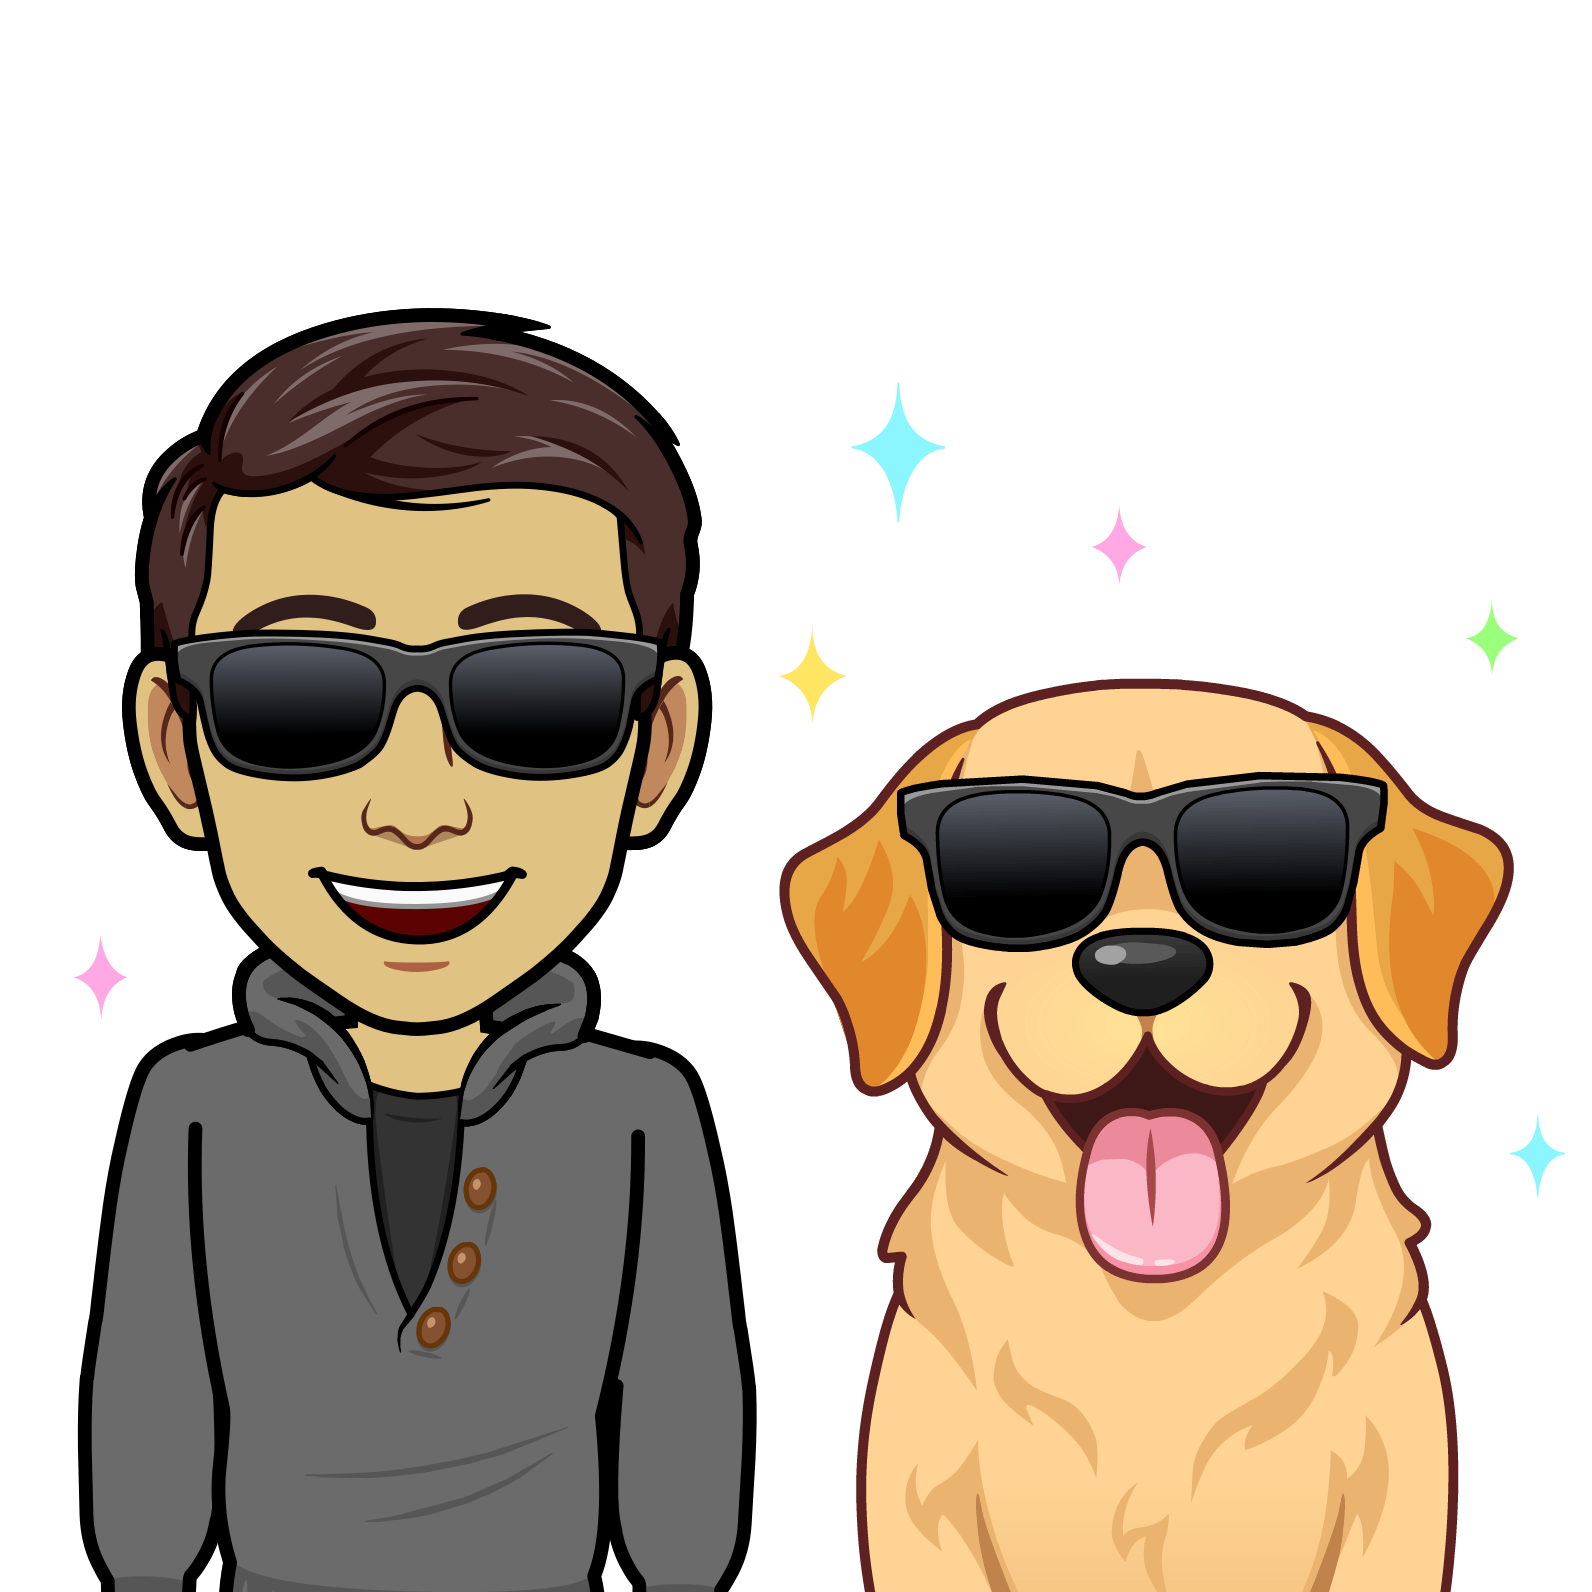 bitmoji photo of me and a dog wearing sunglasses